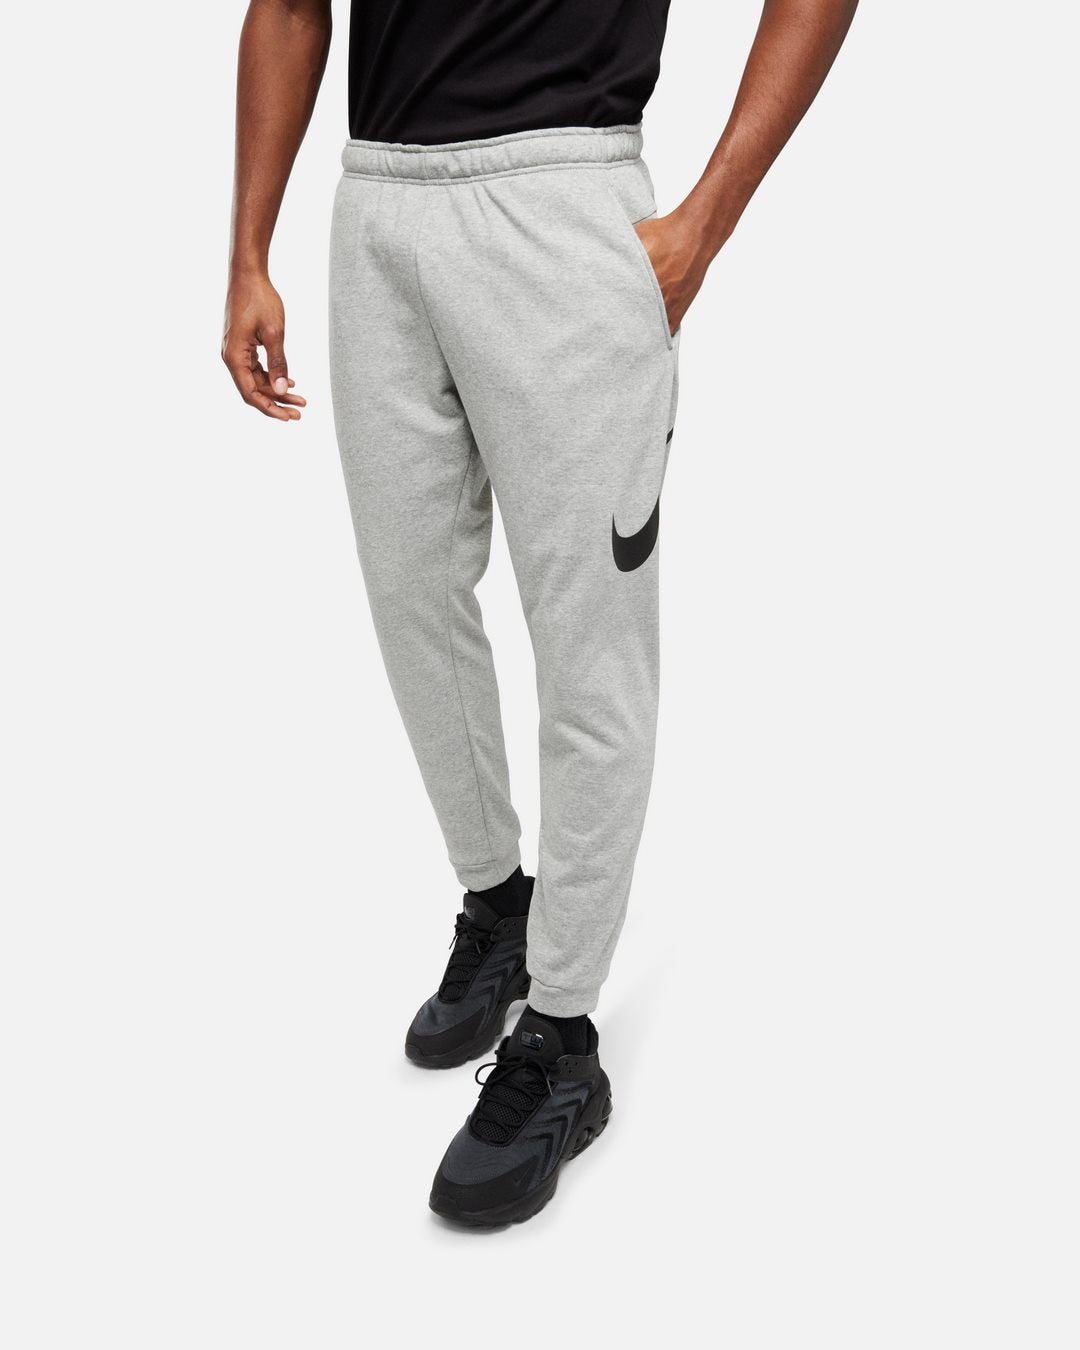 Nike Dry Graphic Pants - Grey/Black